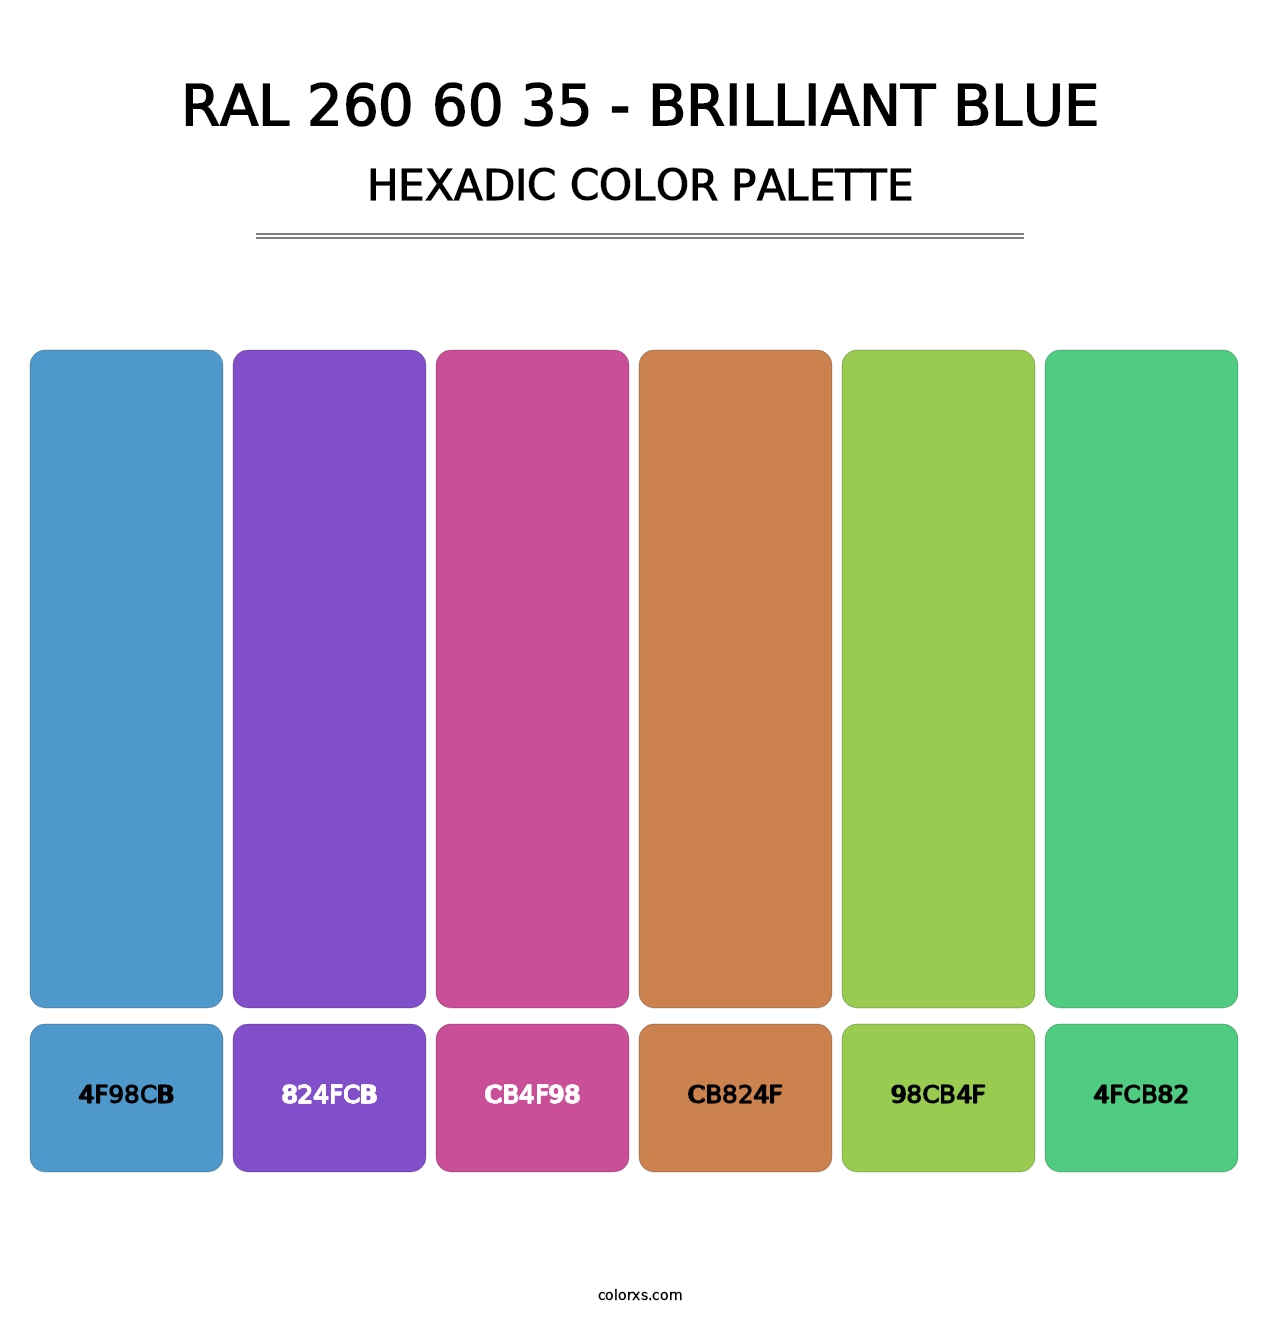 RAL 260 60 35 - Brilliant Blue - Hexadic Color Palette